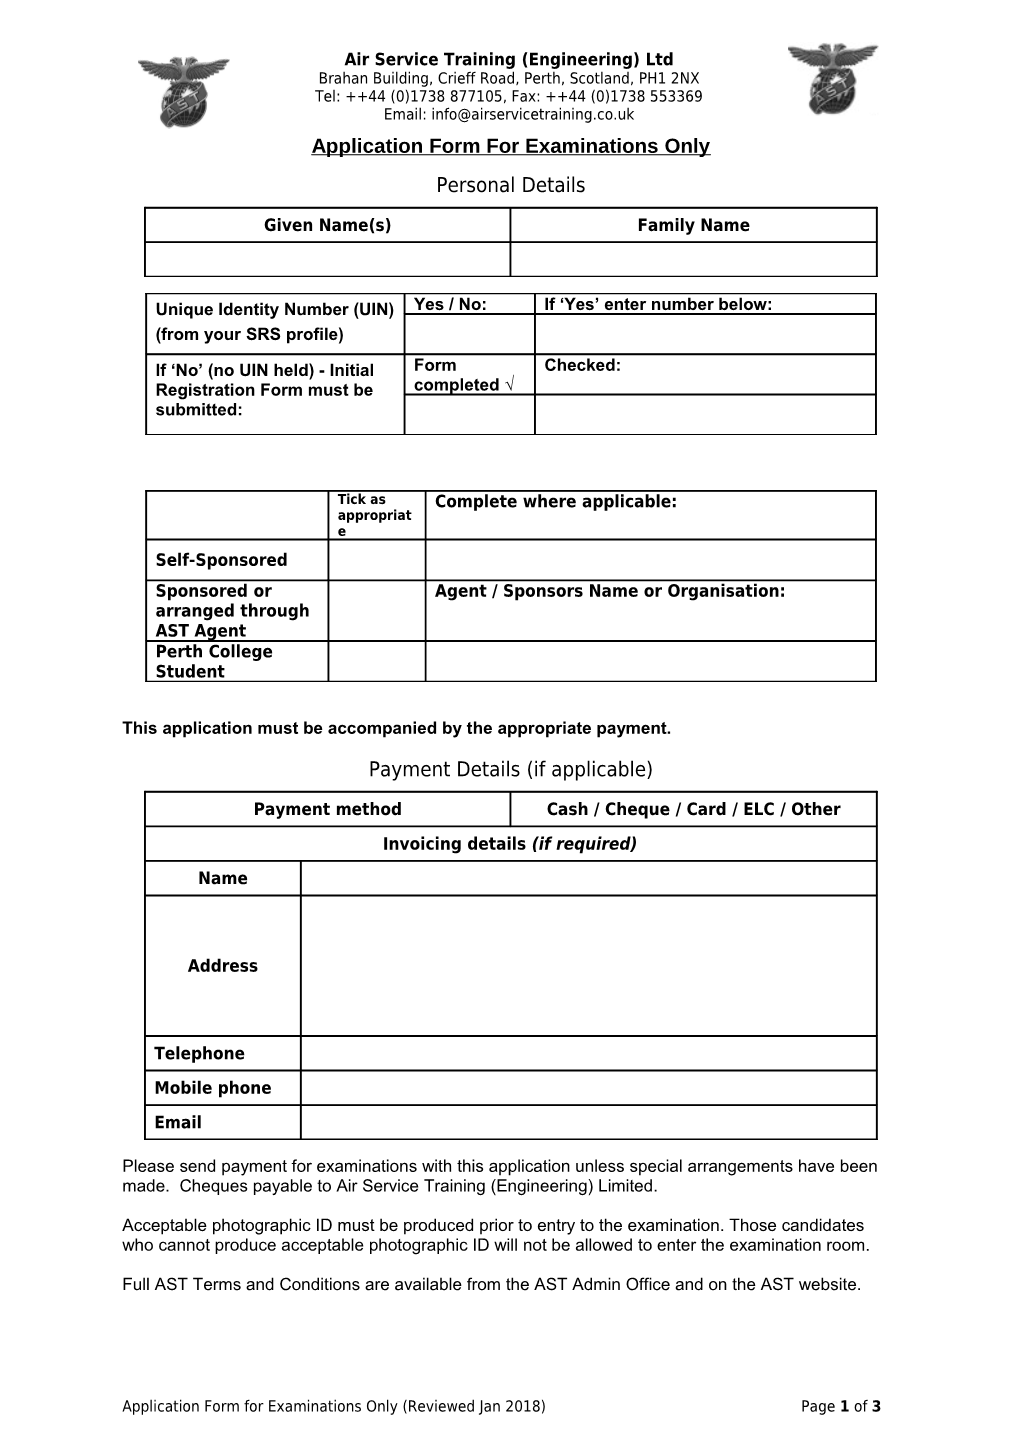 Application Form (Individual)